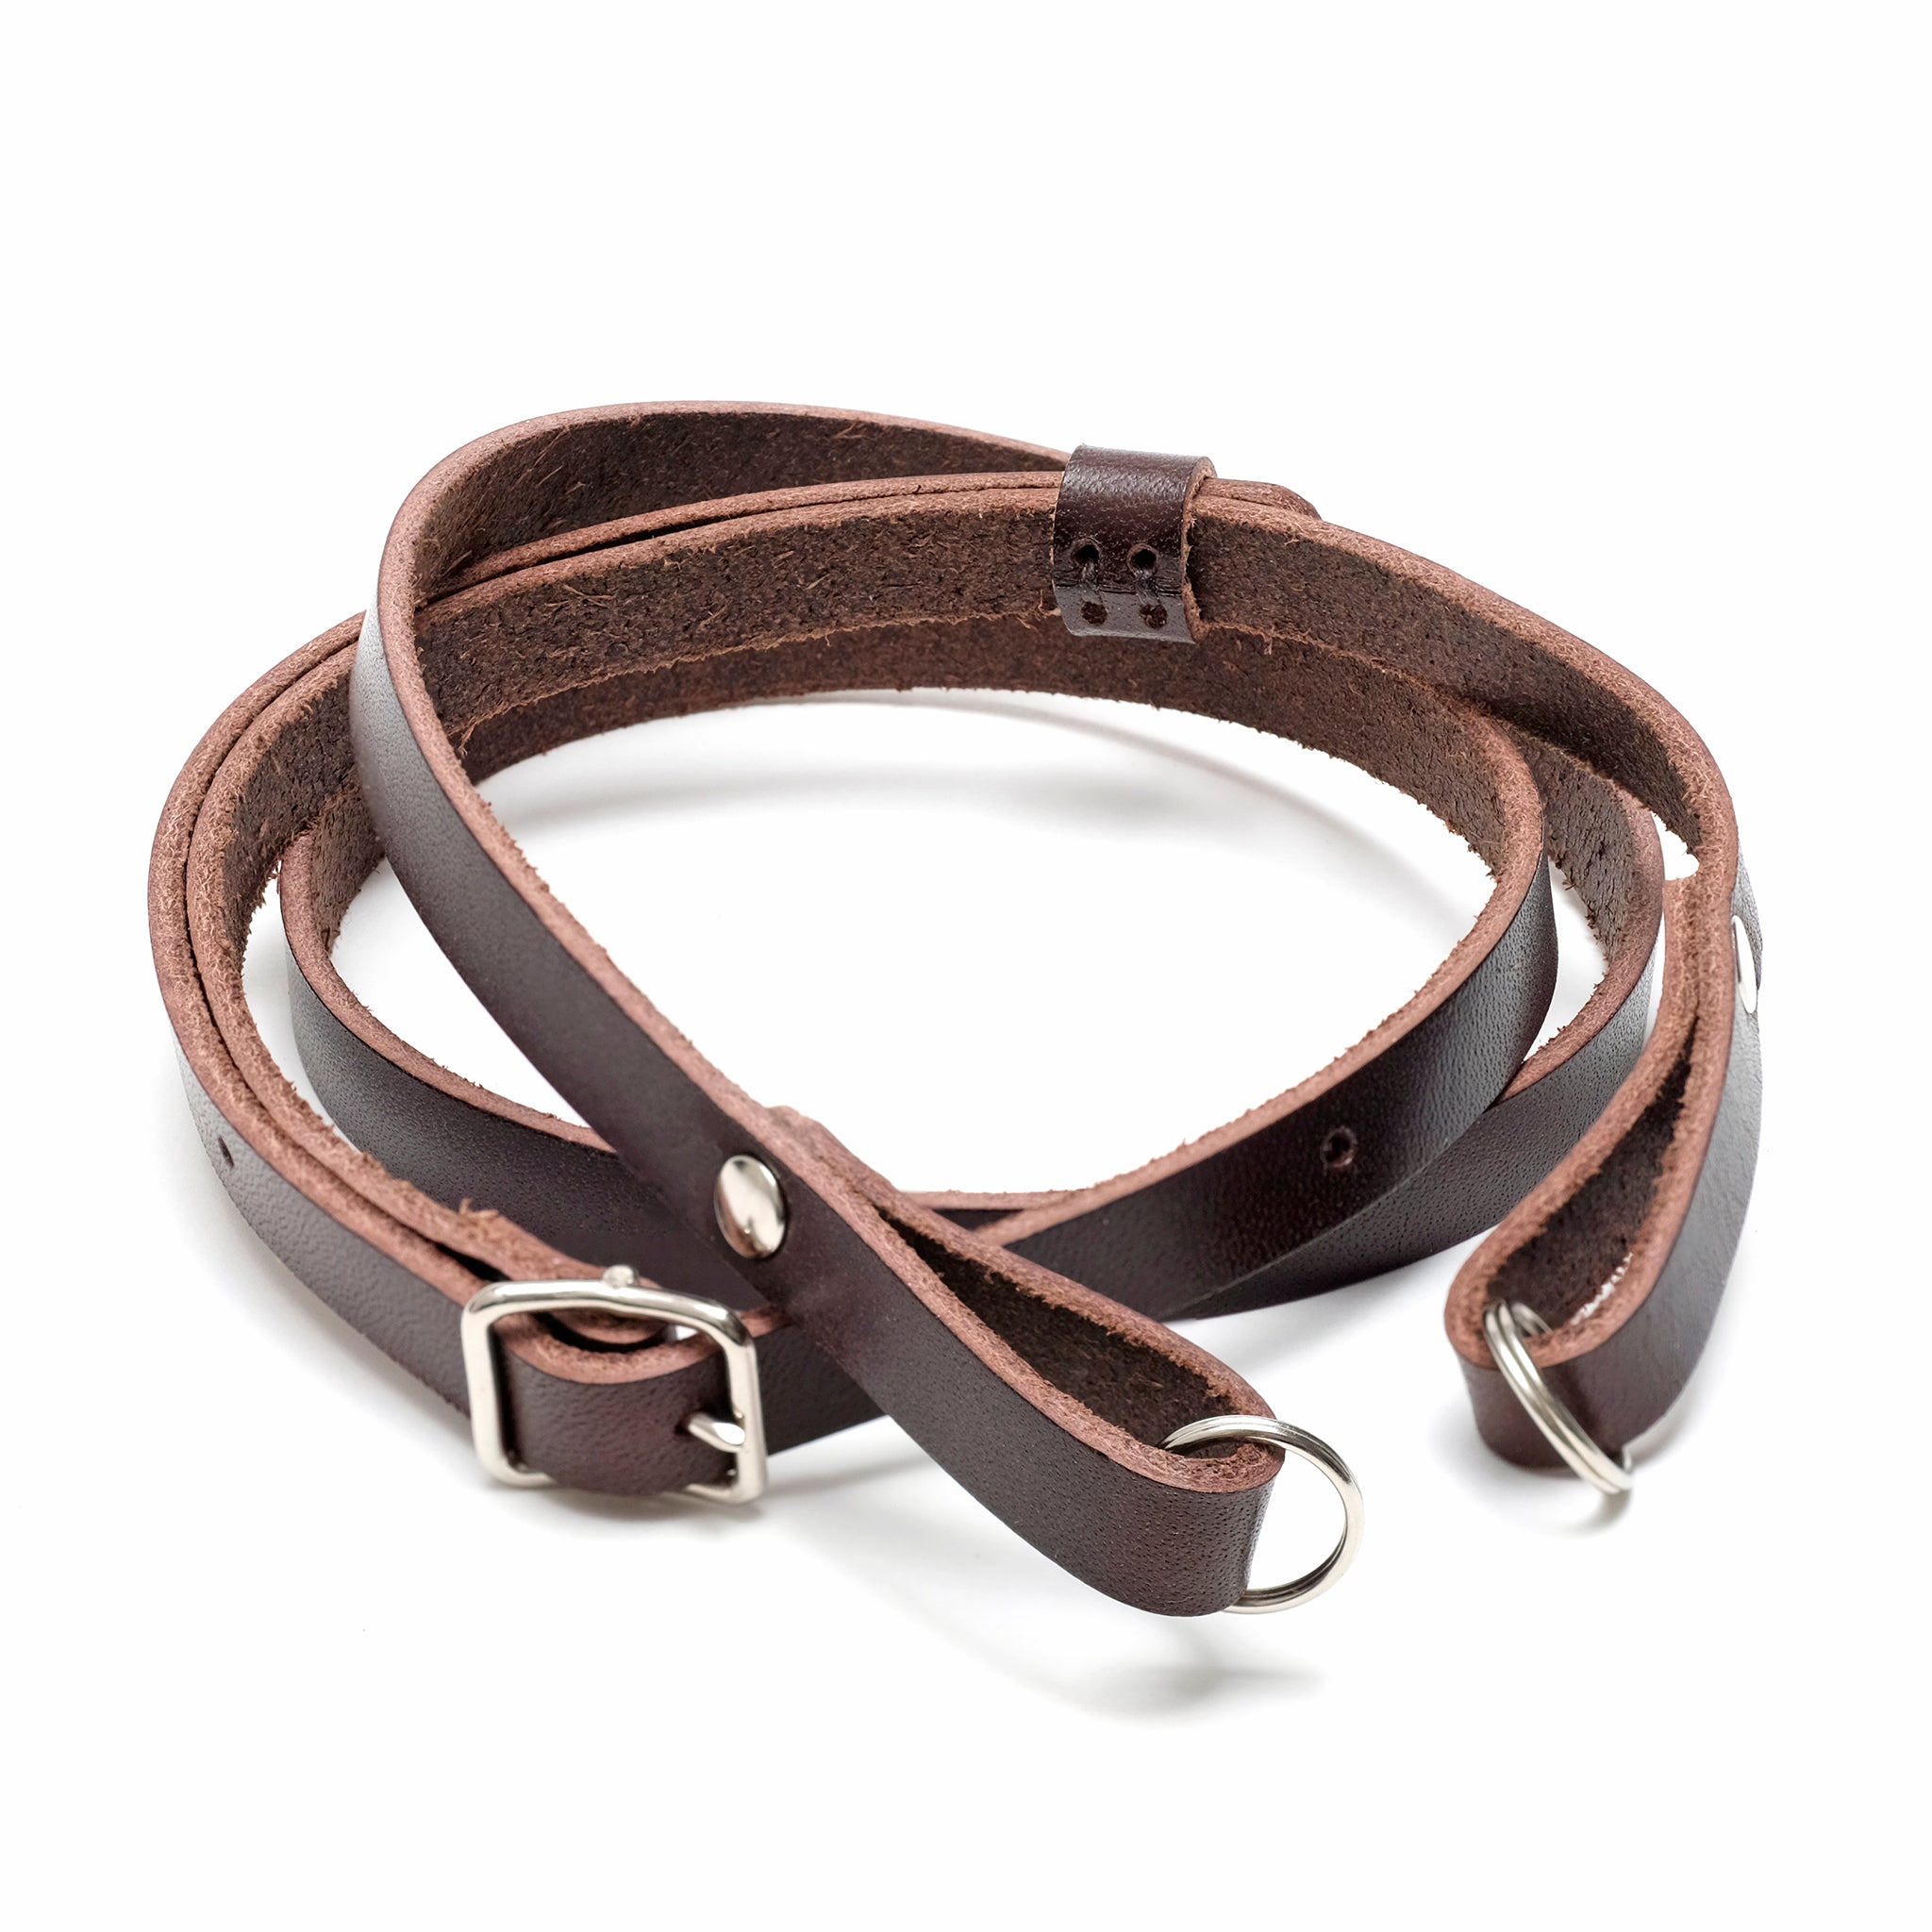 Adjustable leather camera strap, dark brown